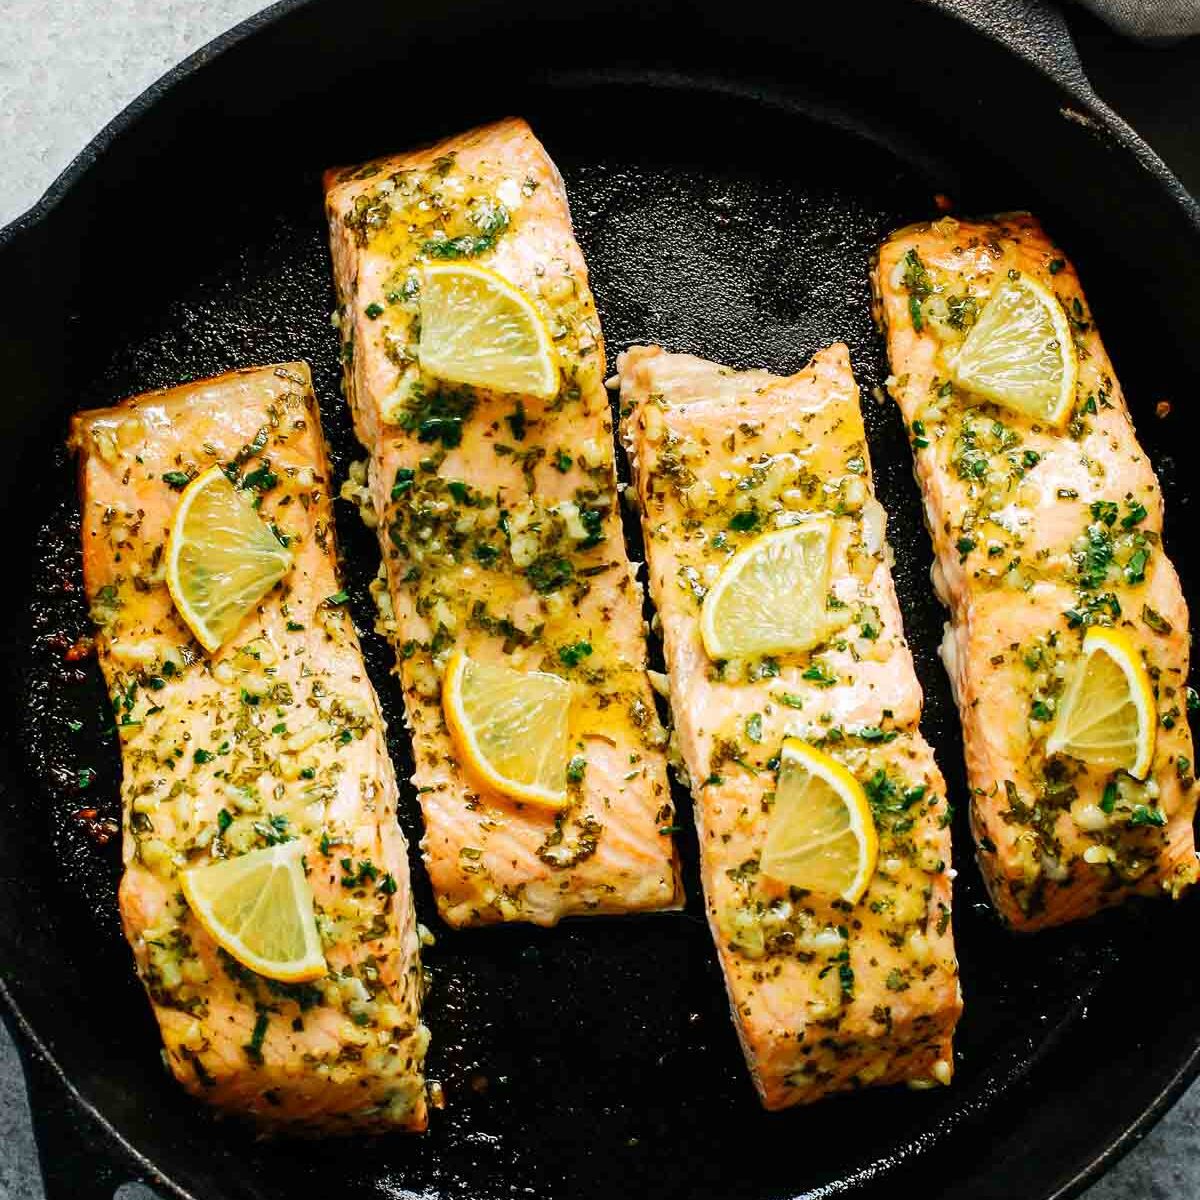 Dijon mustard salmon in a cast iron skillet. One of my favorite date night dinner ideas. 